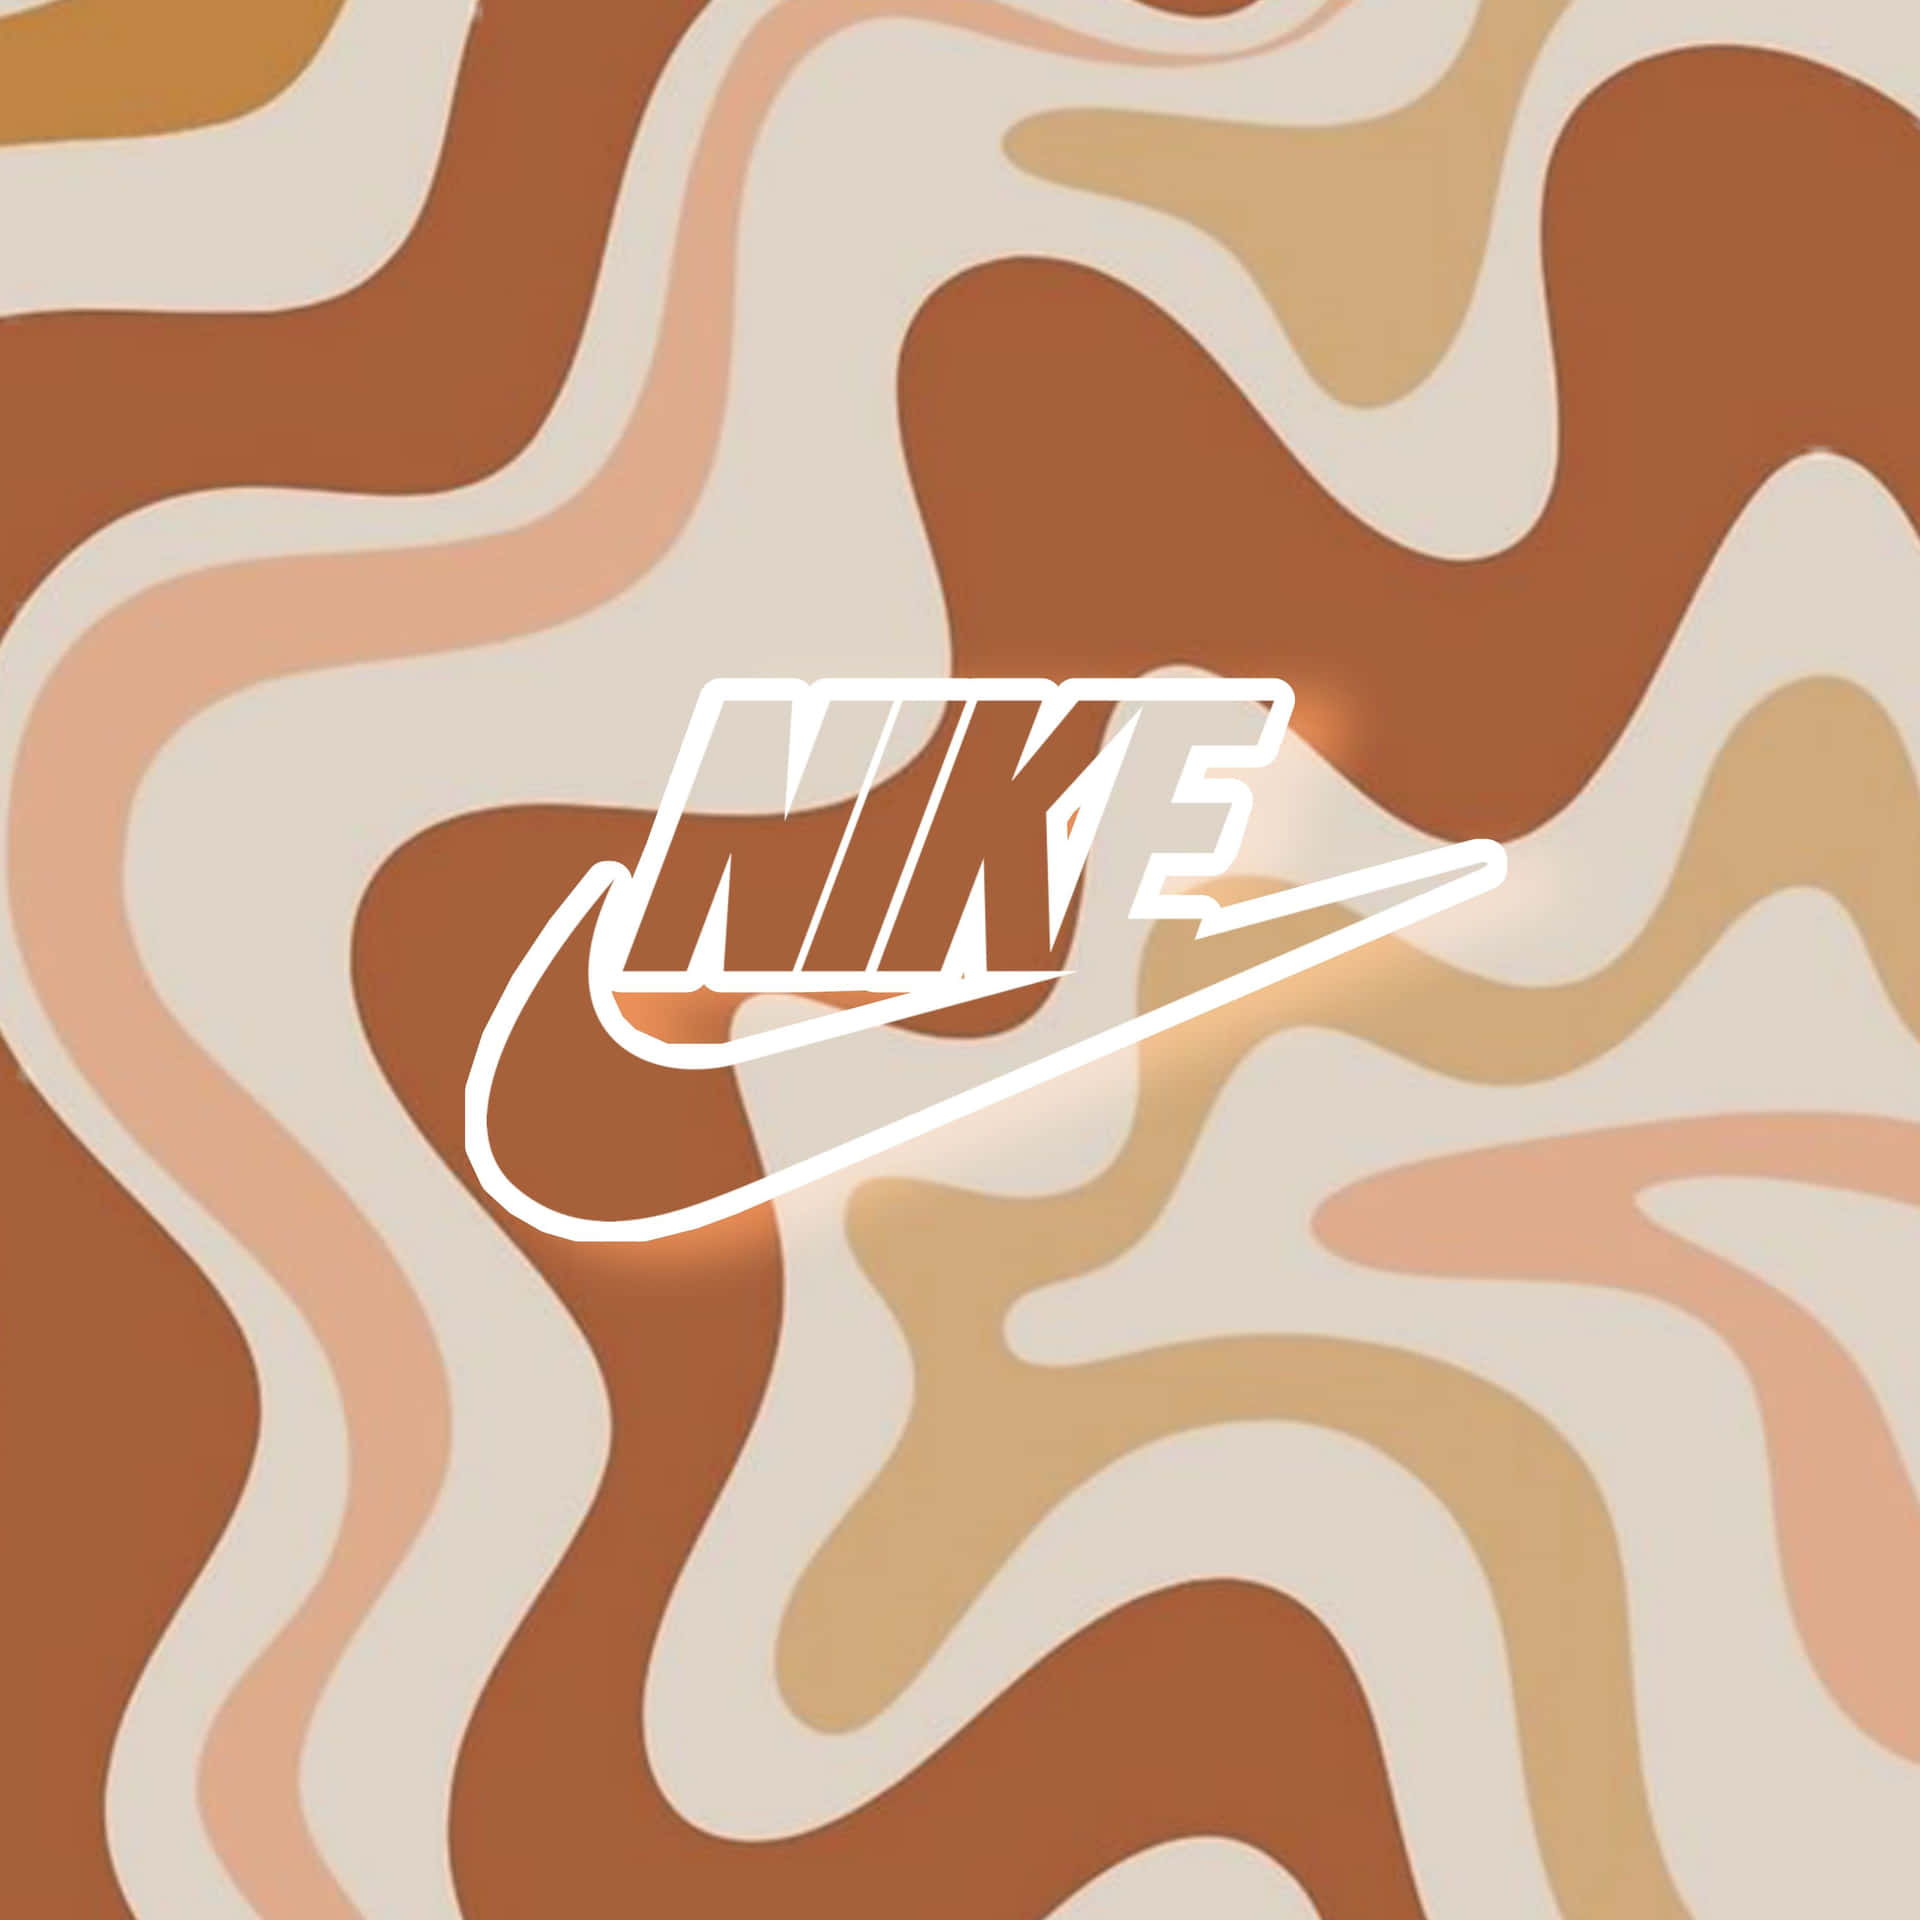 Trippy Nike Aesthetic Wavy Background Wallpaper